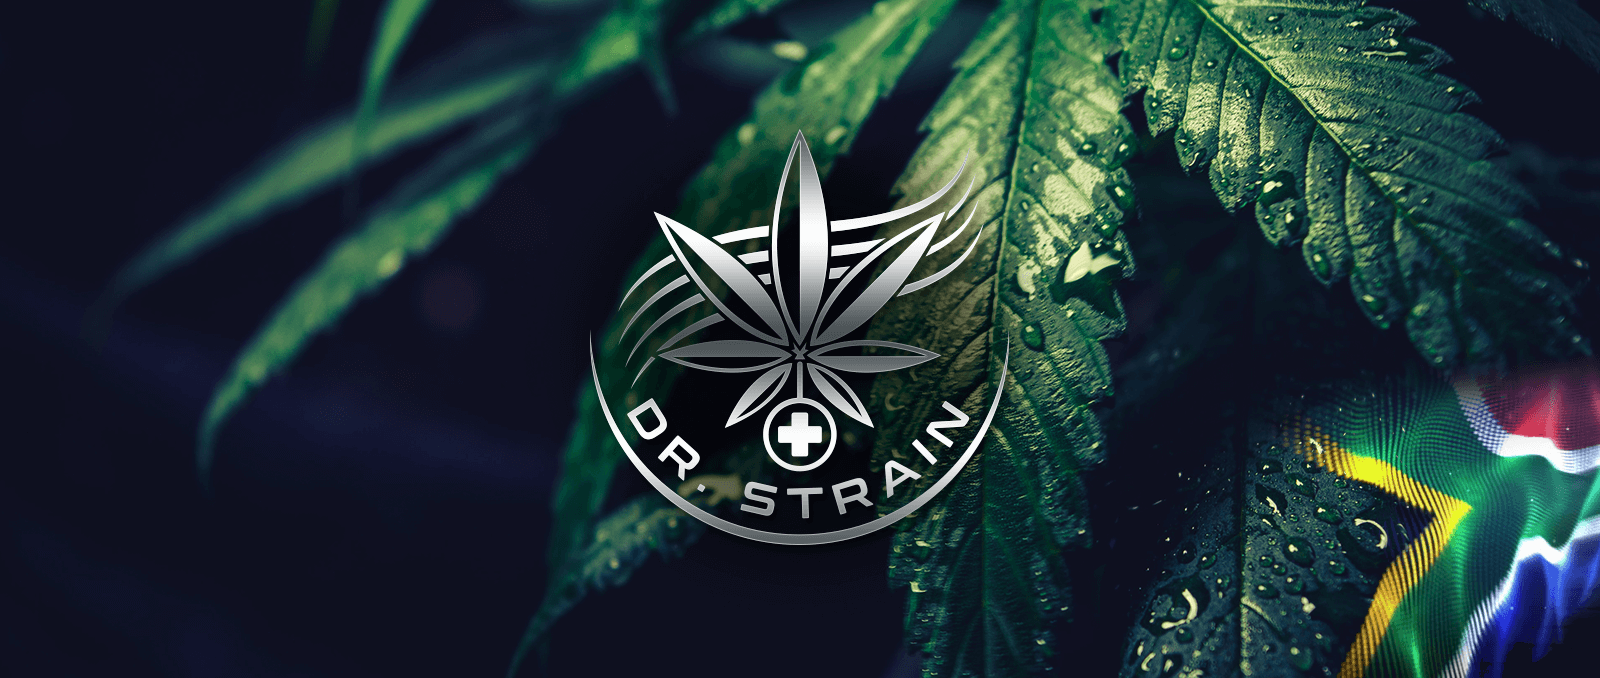 dr-g-strain-banner-1.1